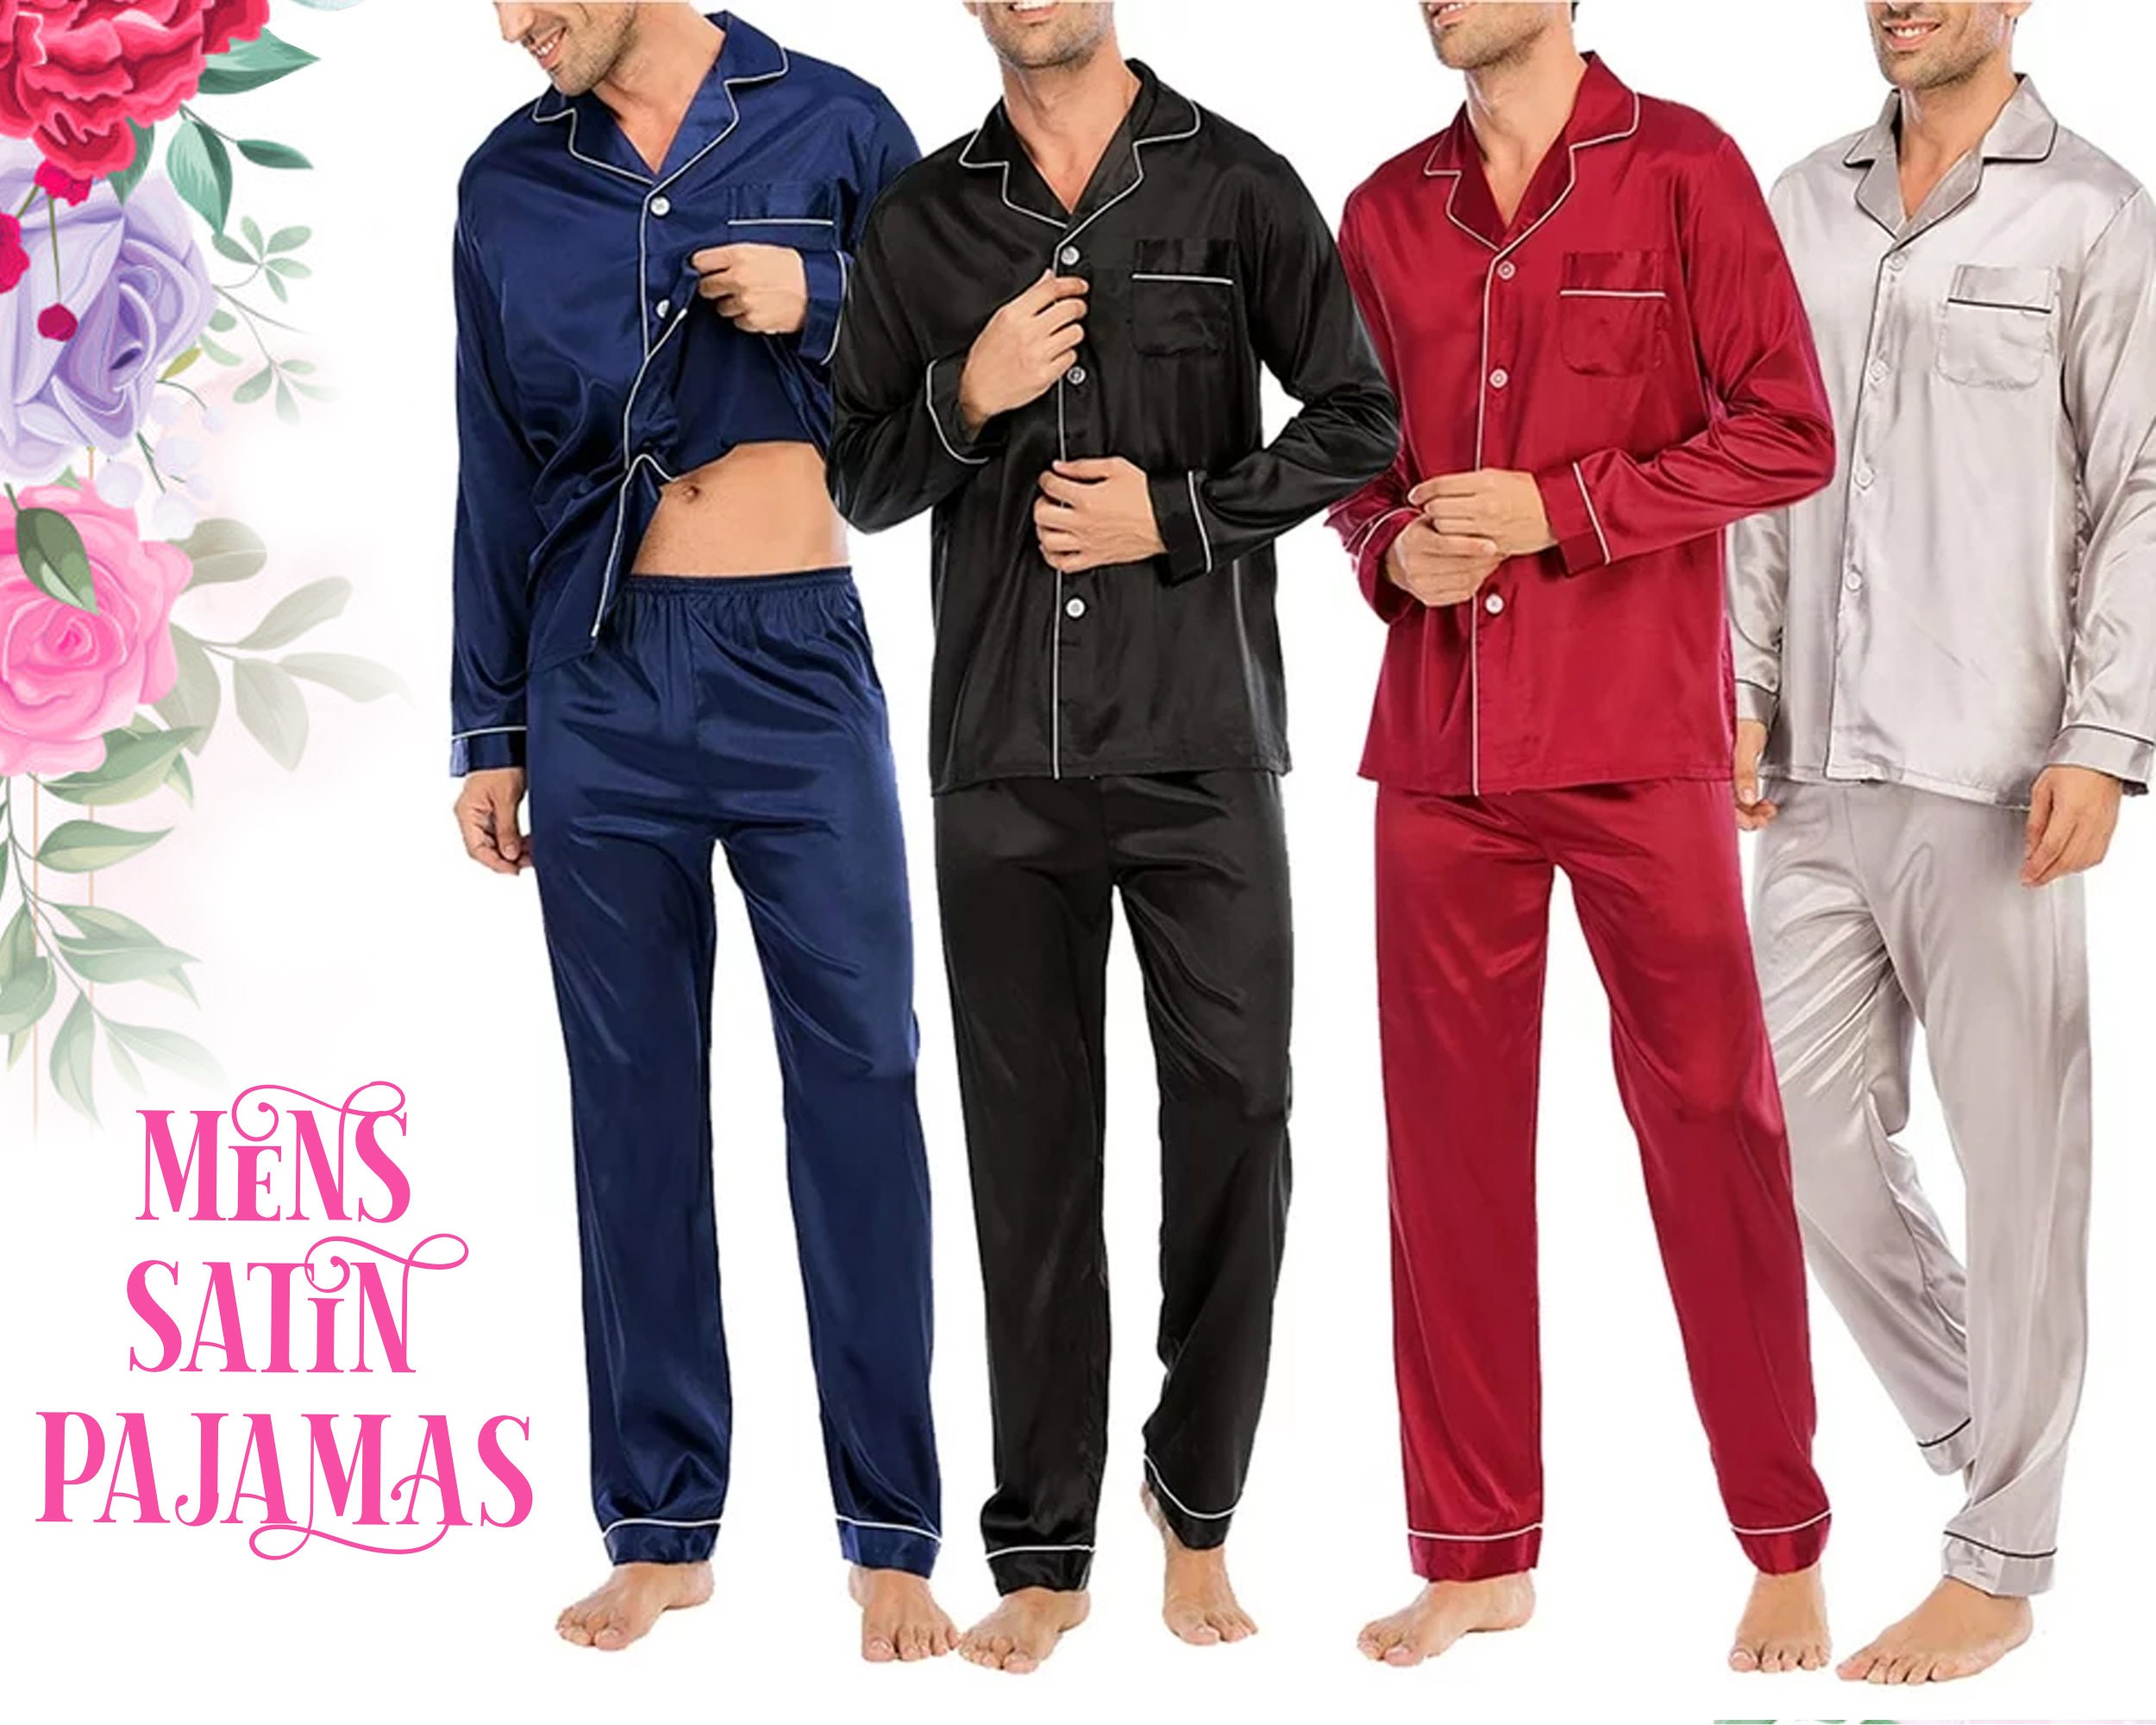 Silk Pajamas for Women's Satin Pyjama Set Long Sleeve Casual Sleepwear  Nightwear Comfortable Loungewearr Satin,Pink (Pink M)